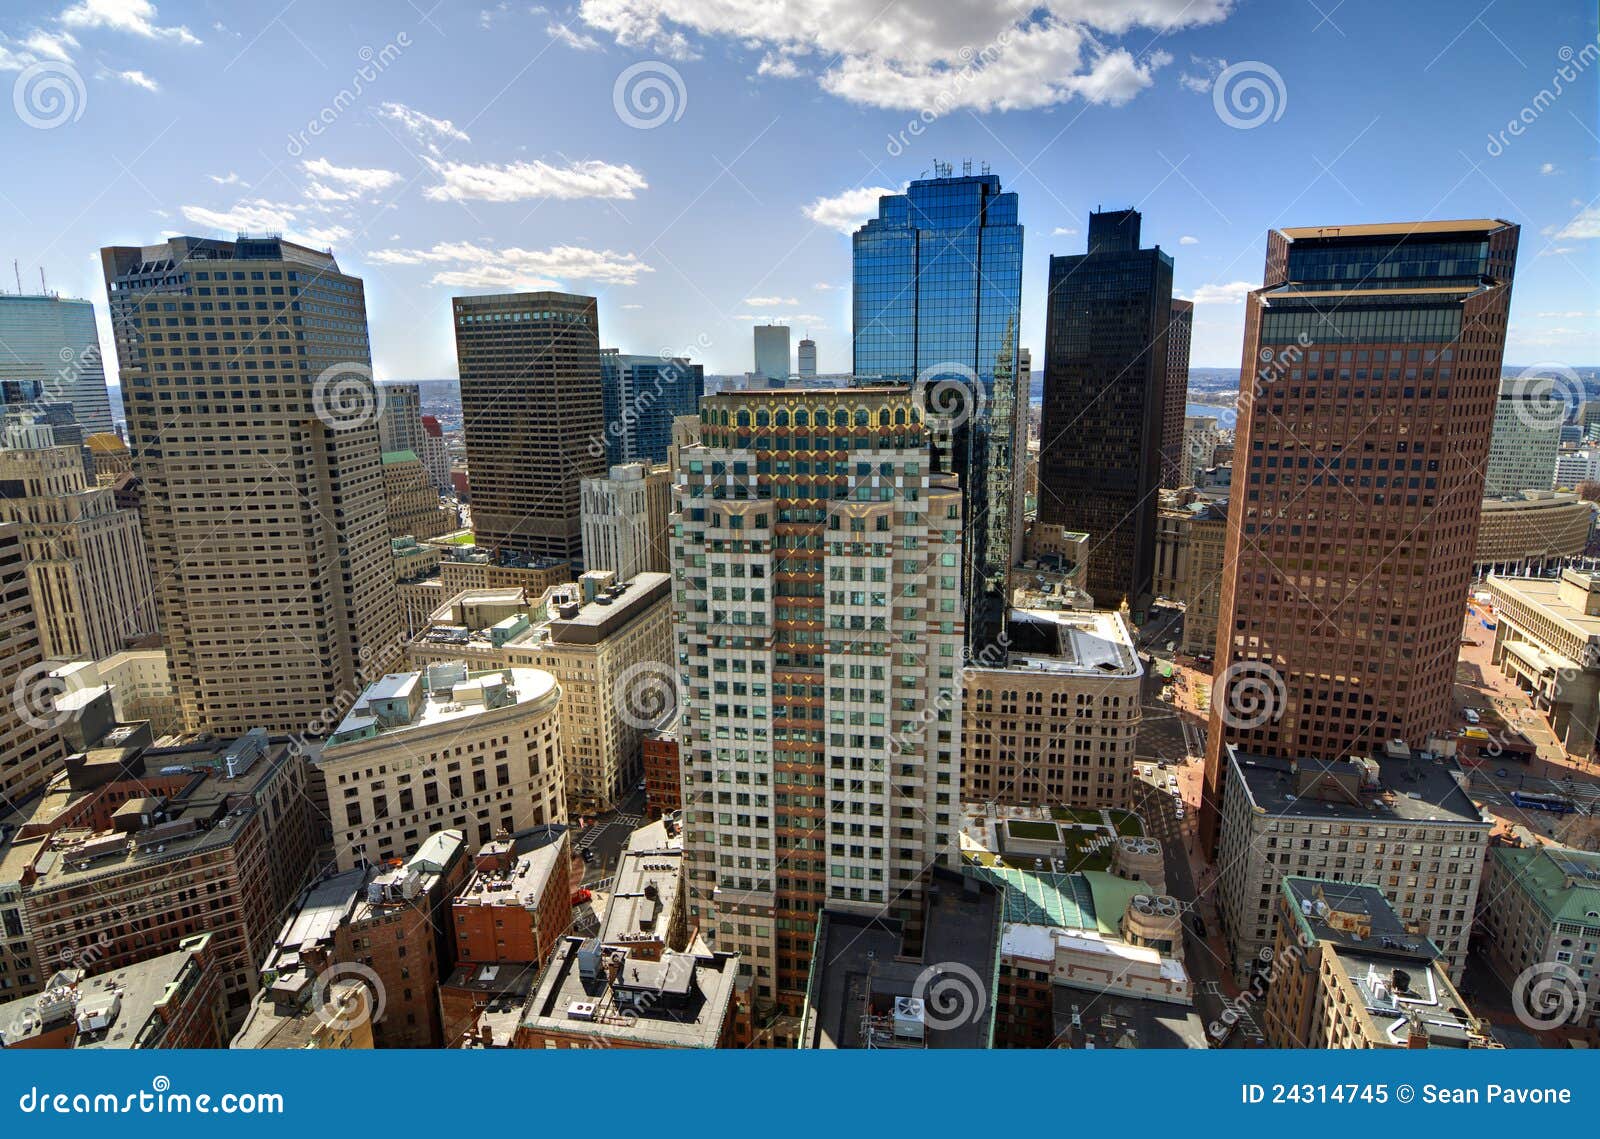 boston high rises